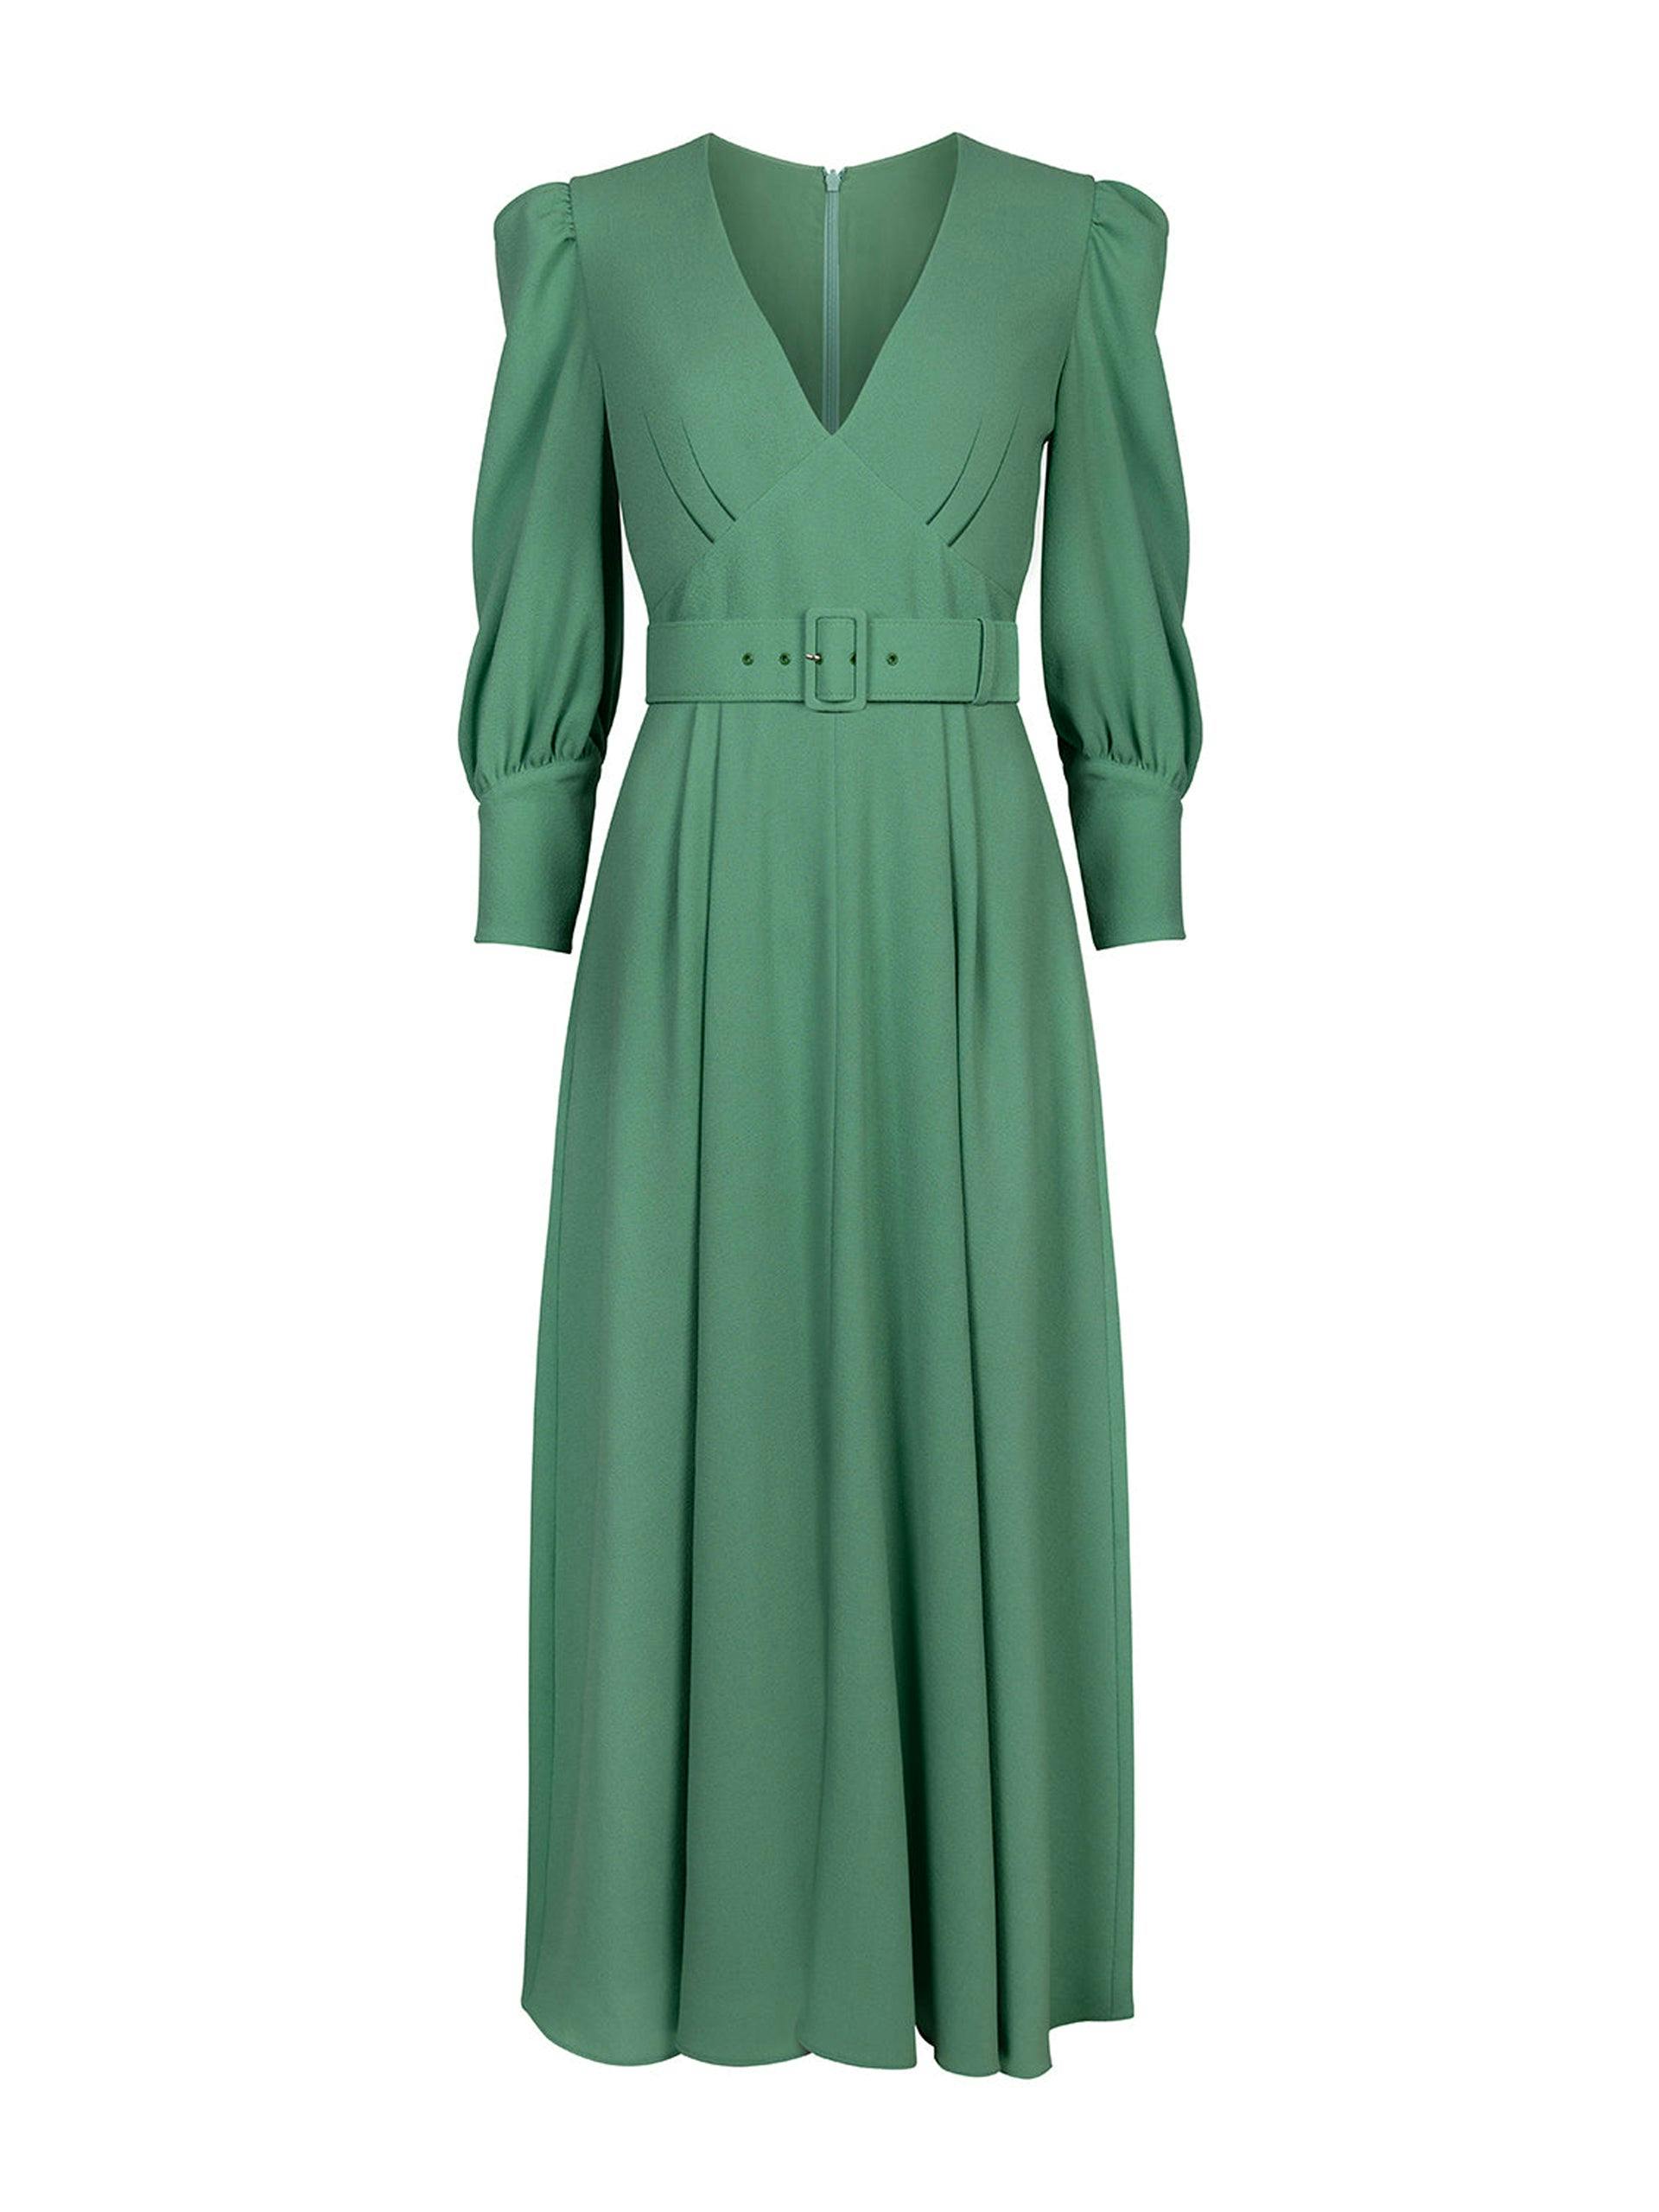 Florentina pea green dress